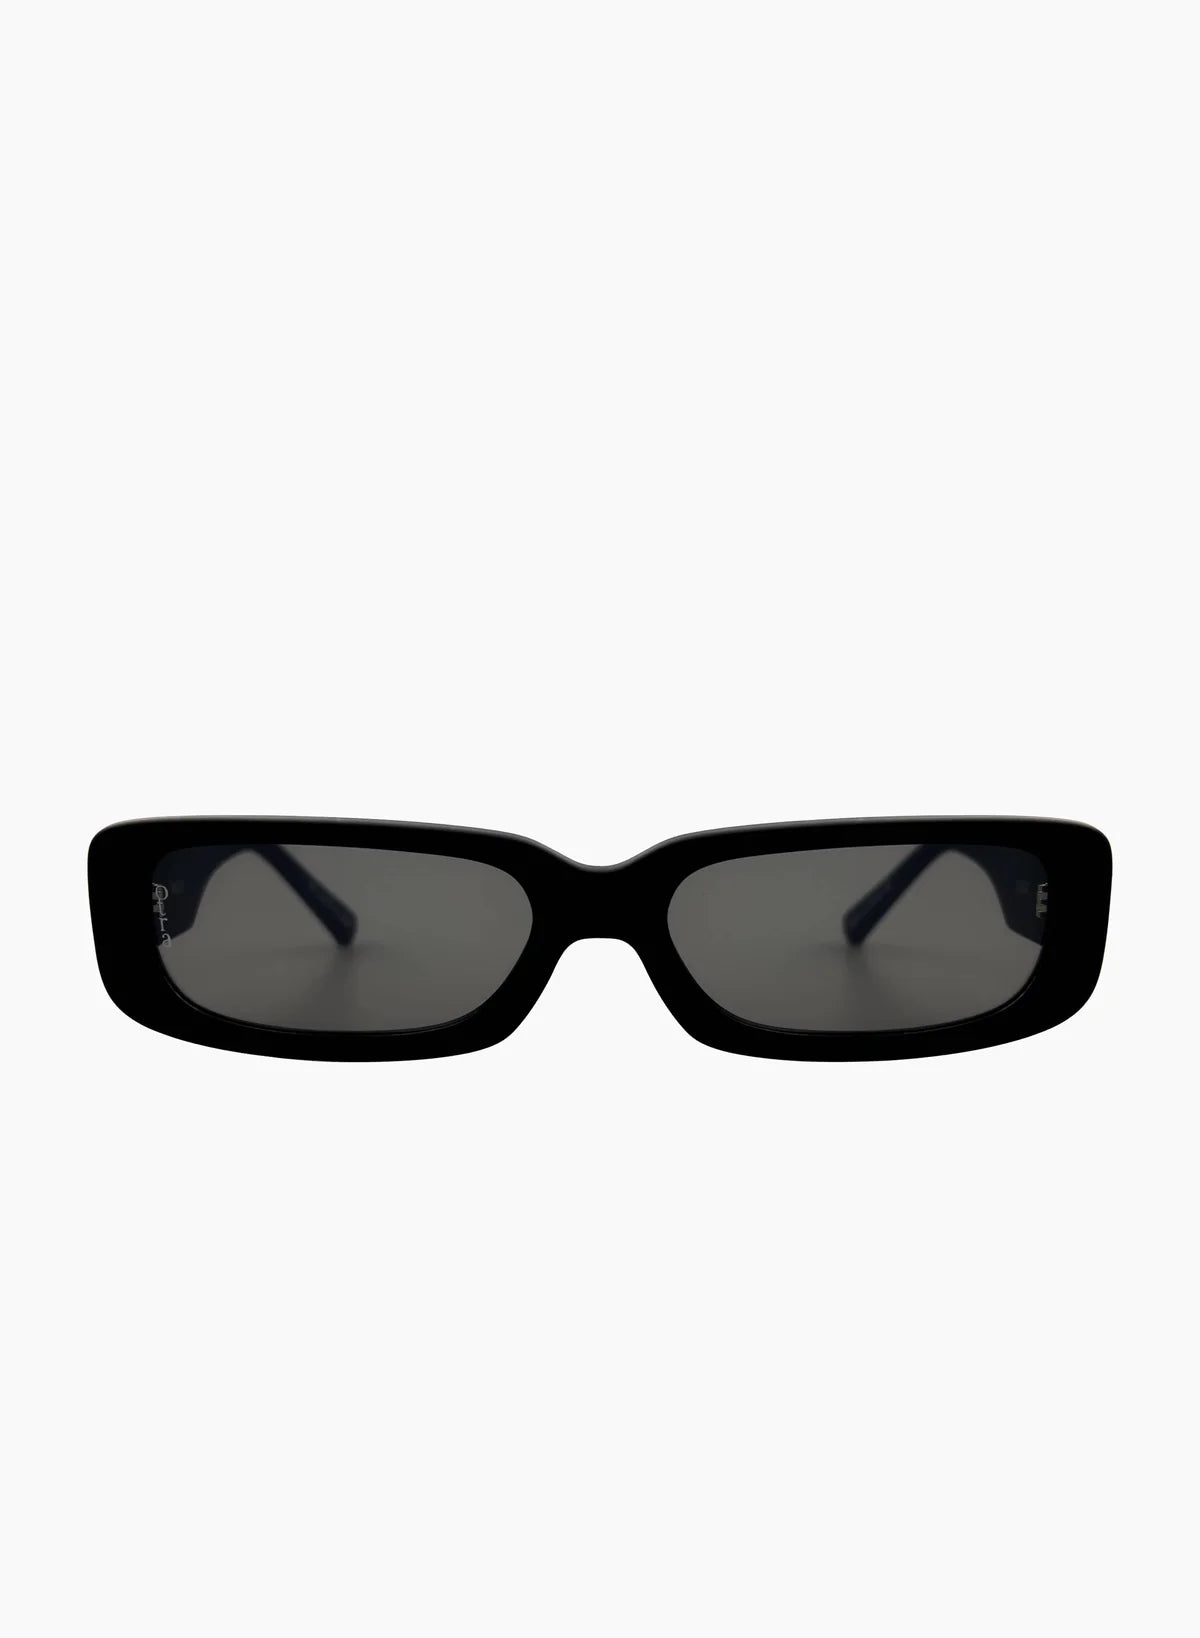 Sunny Sunglasses Rubber Black, Sunglass Acc by Otra | LIT Boutique